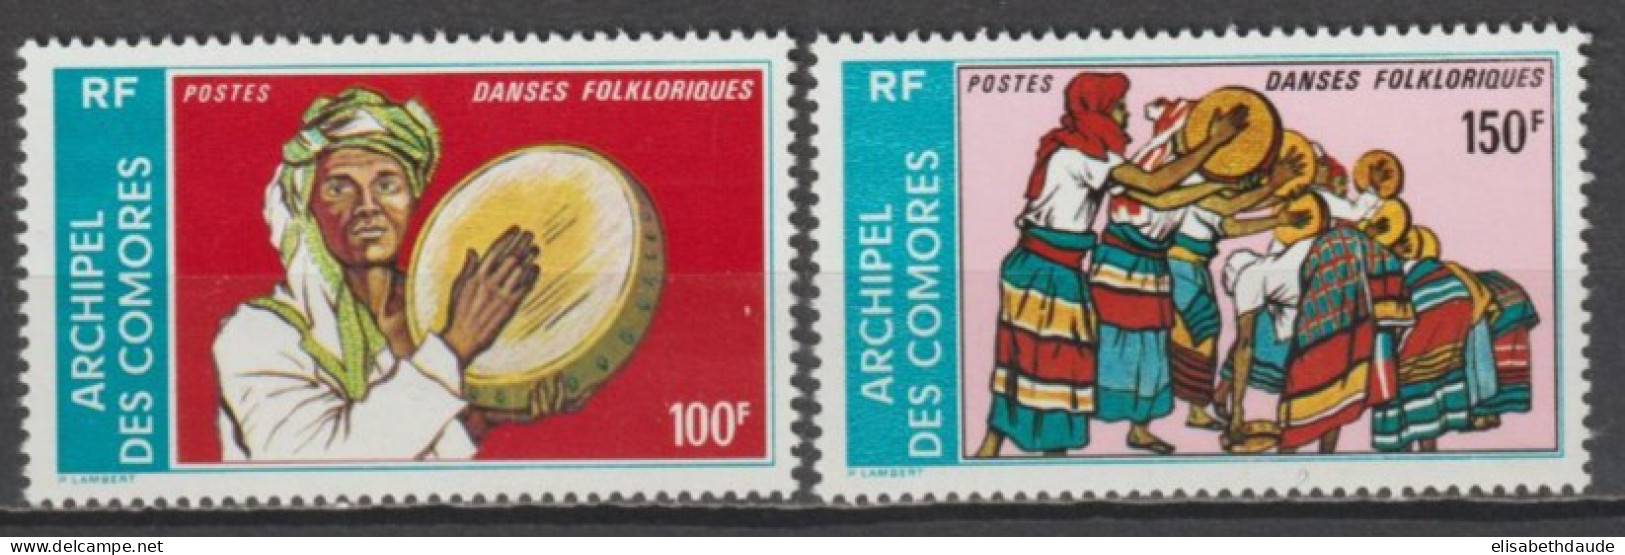 COMORES - 1975 - RARE ! DERNIERE SERIE EMISE  - YVERT 104A/B ** MNH  - COTE = 300 EUR. PRIX DISCOUNT ! - Nuevos